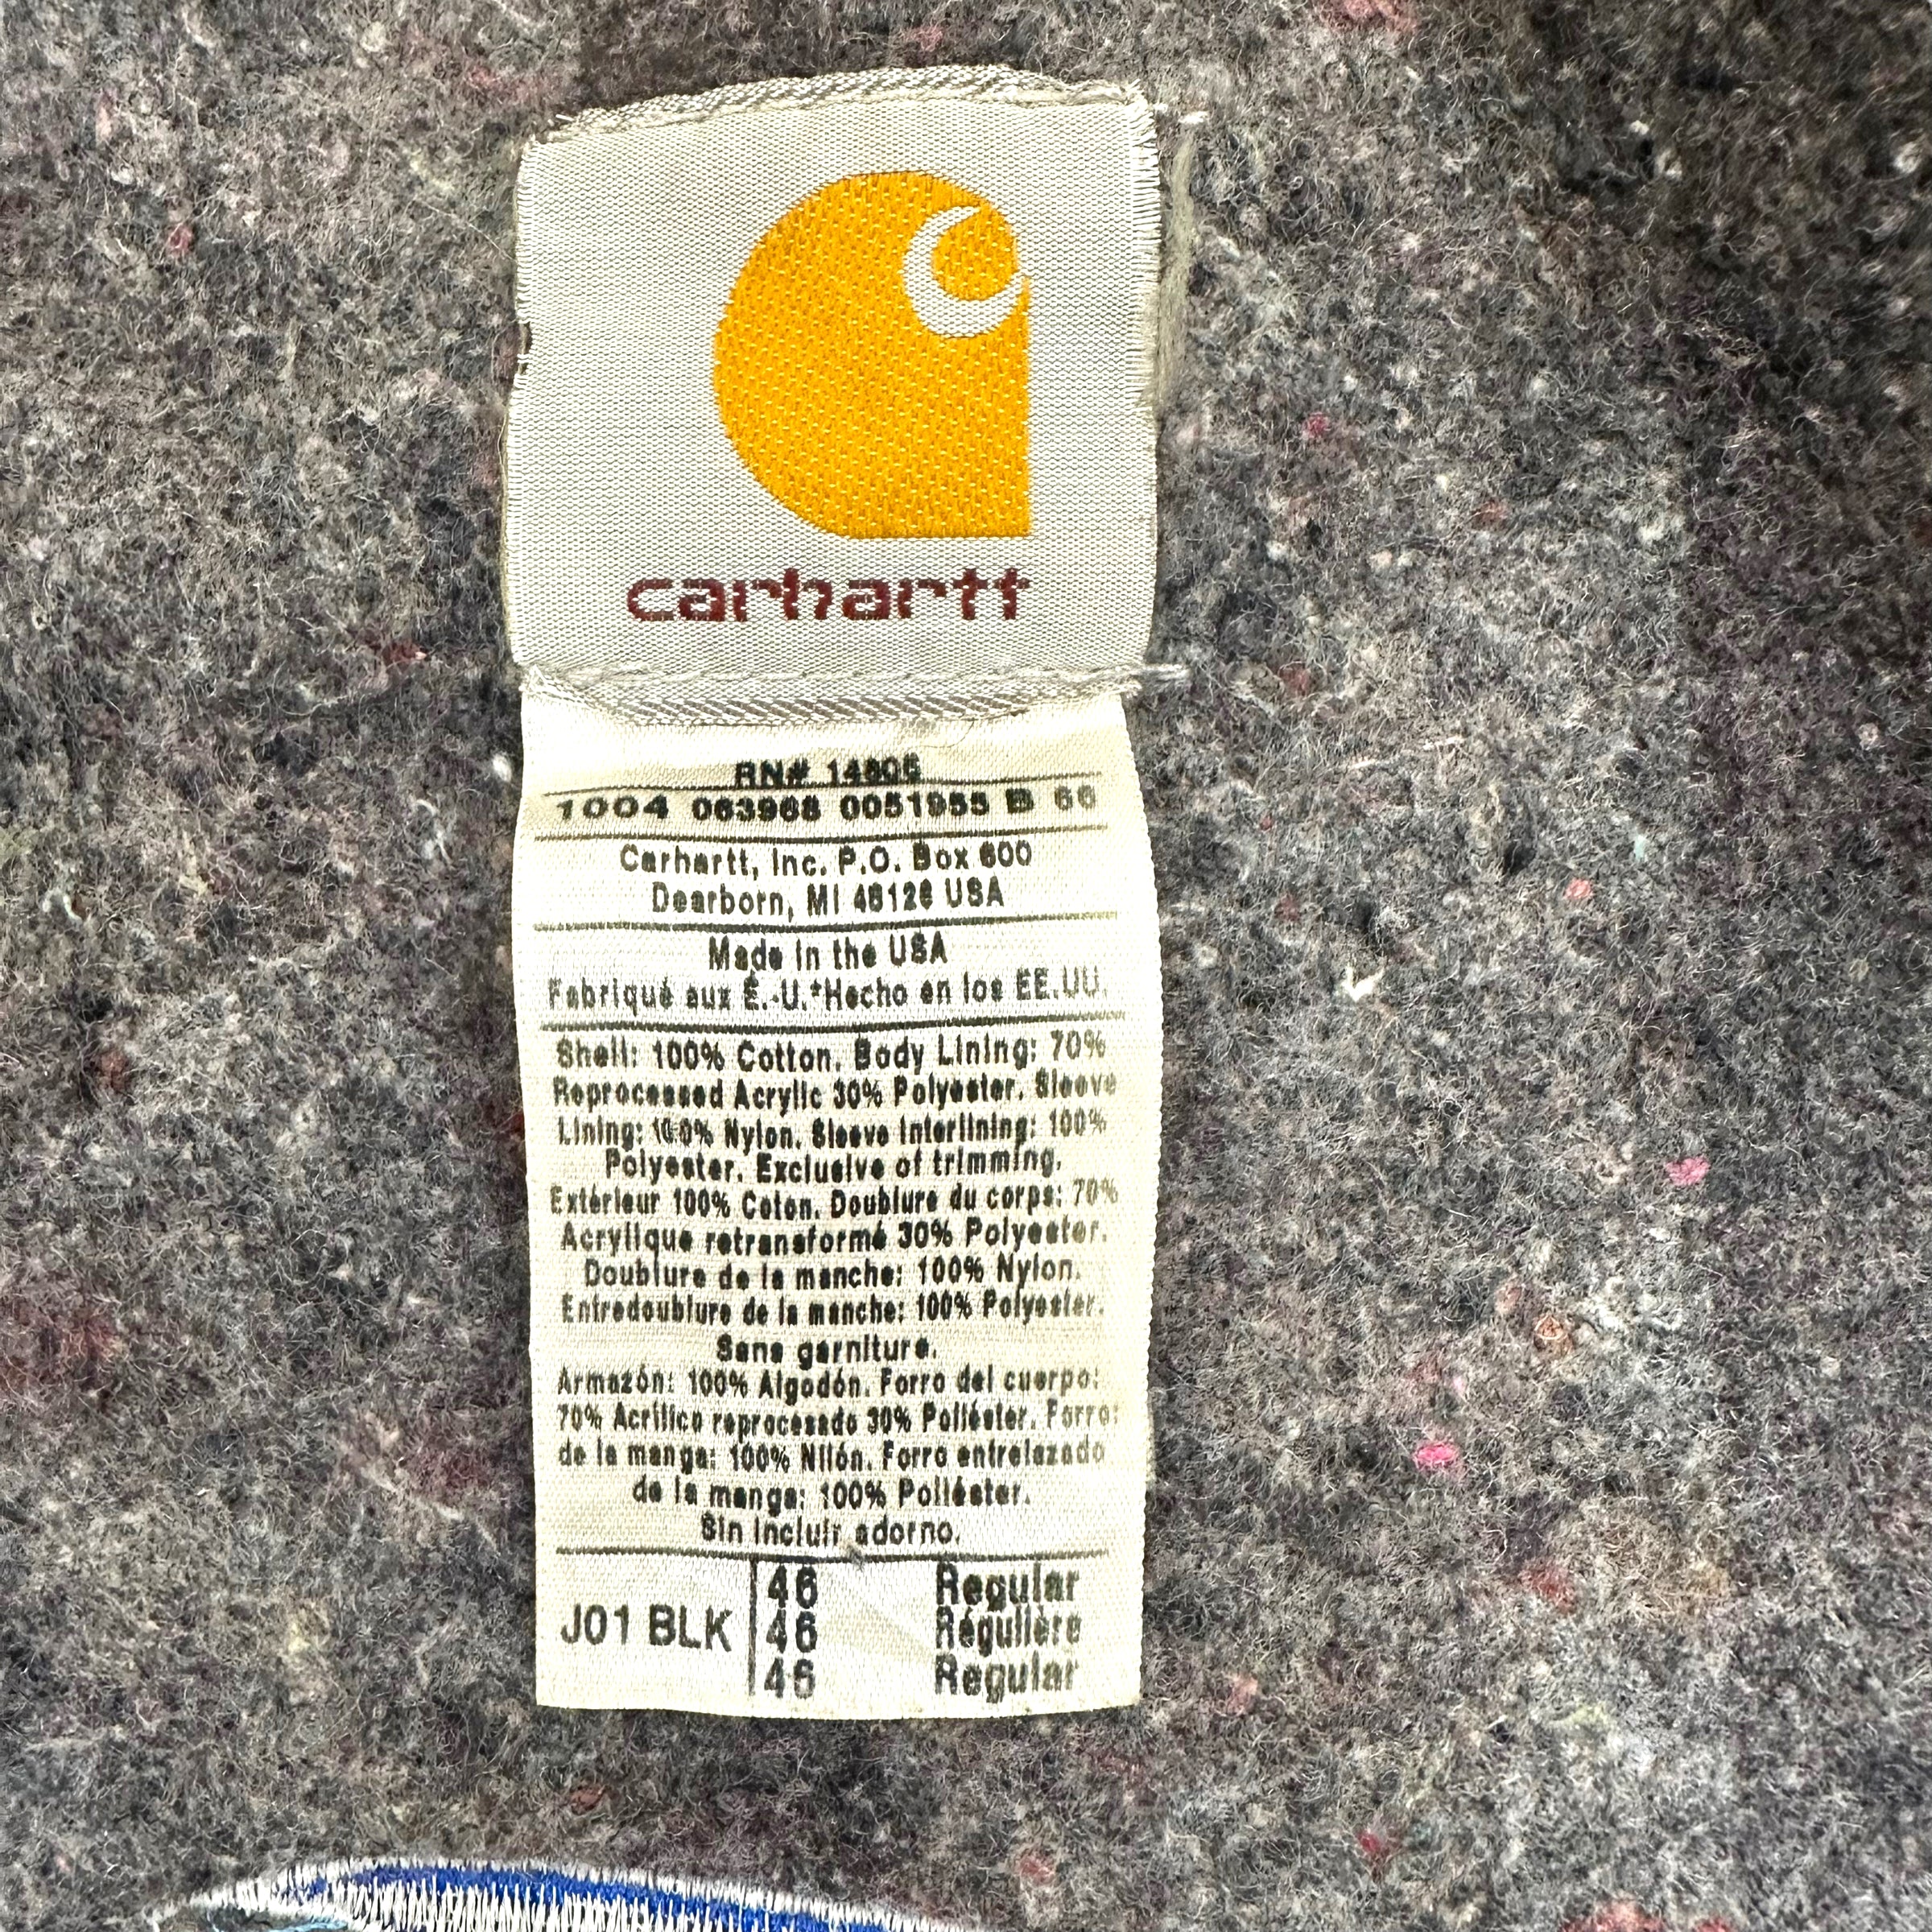 GN57 carhartt カーハート デトロイト ジャケット ネイビー系 USA製 サイズ 46 Regular